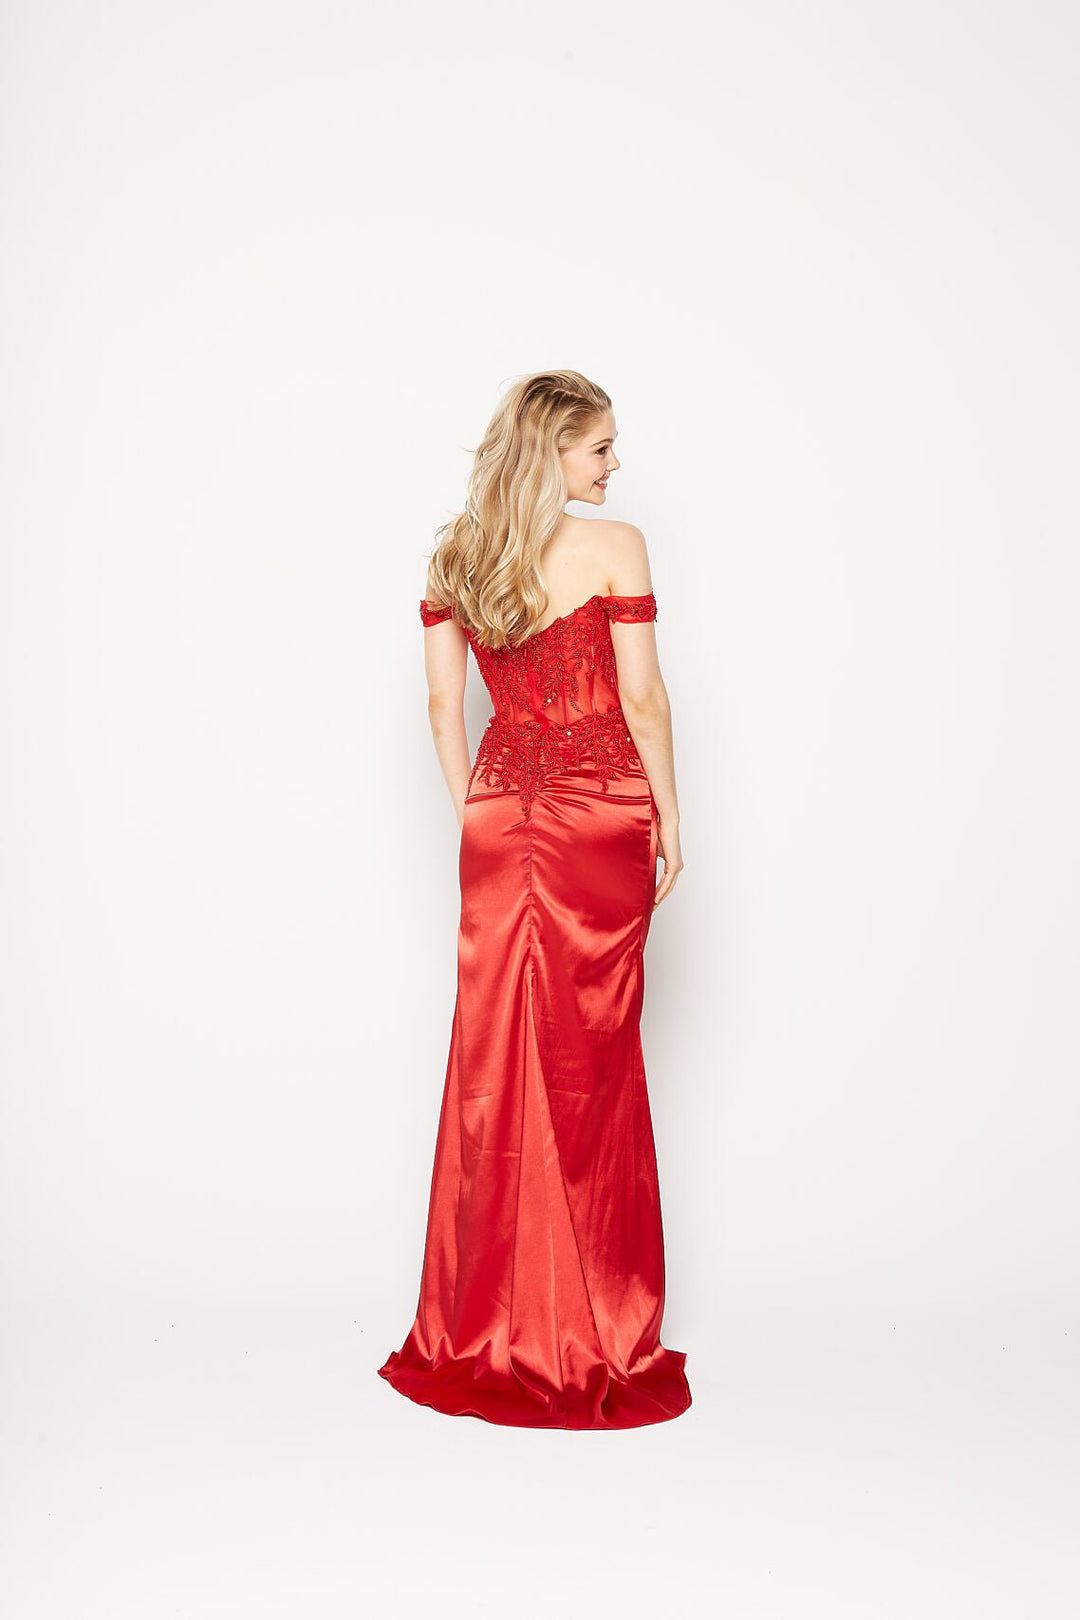 Lorelei Dress by Tania Olsen PO2304 - ElissaJay Boutique